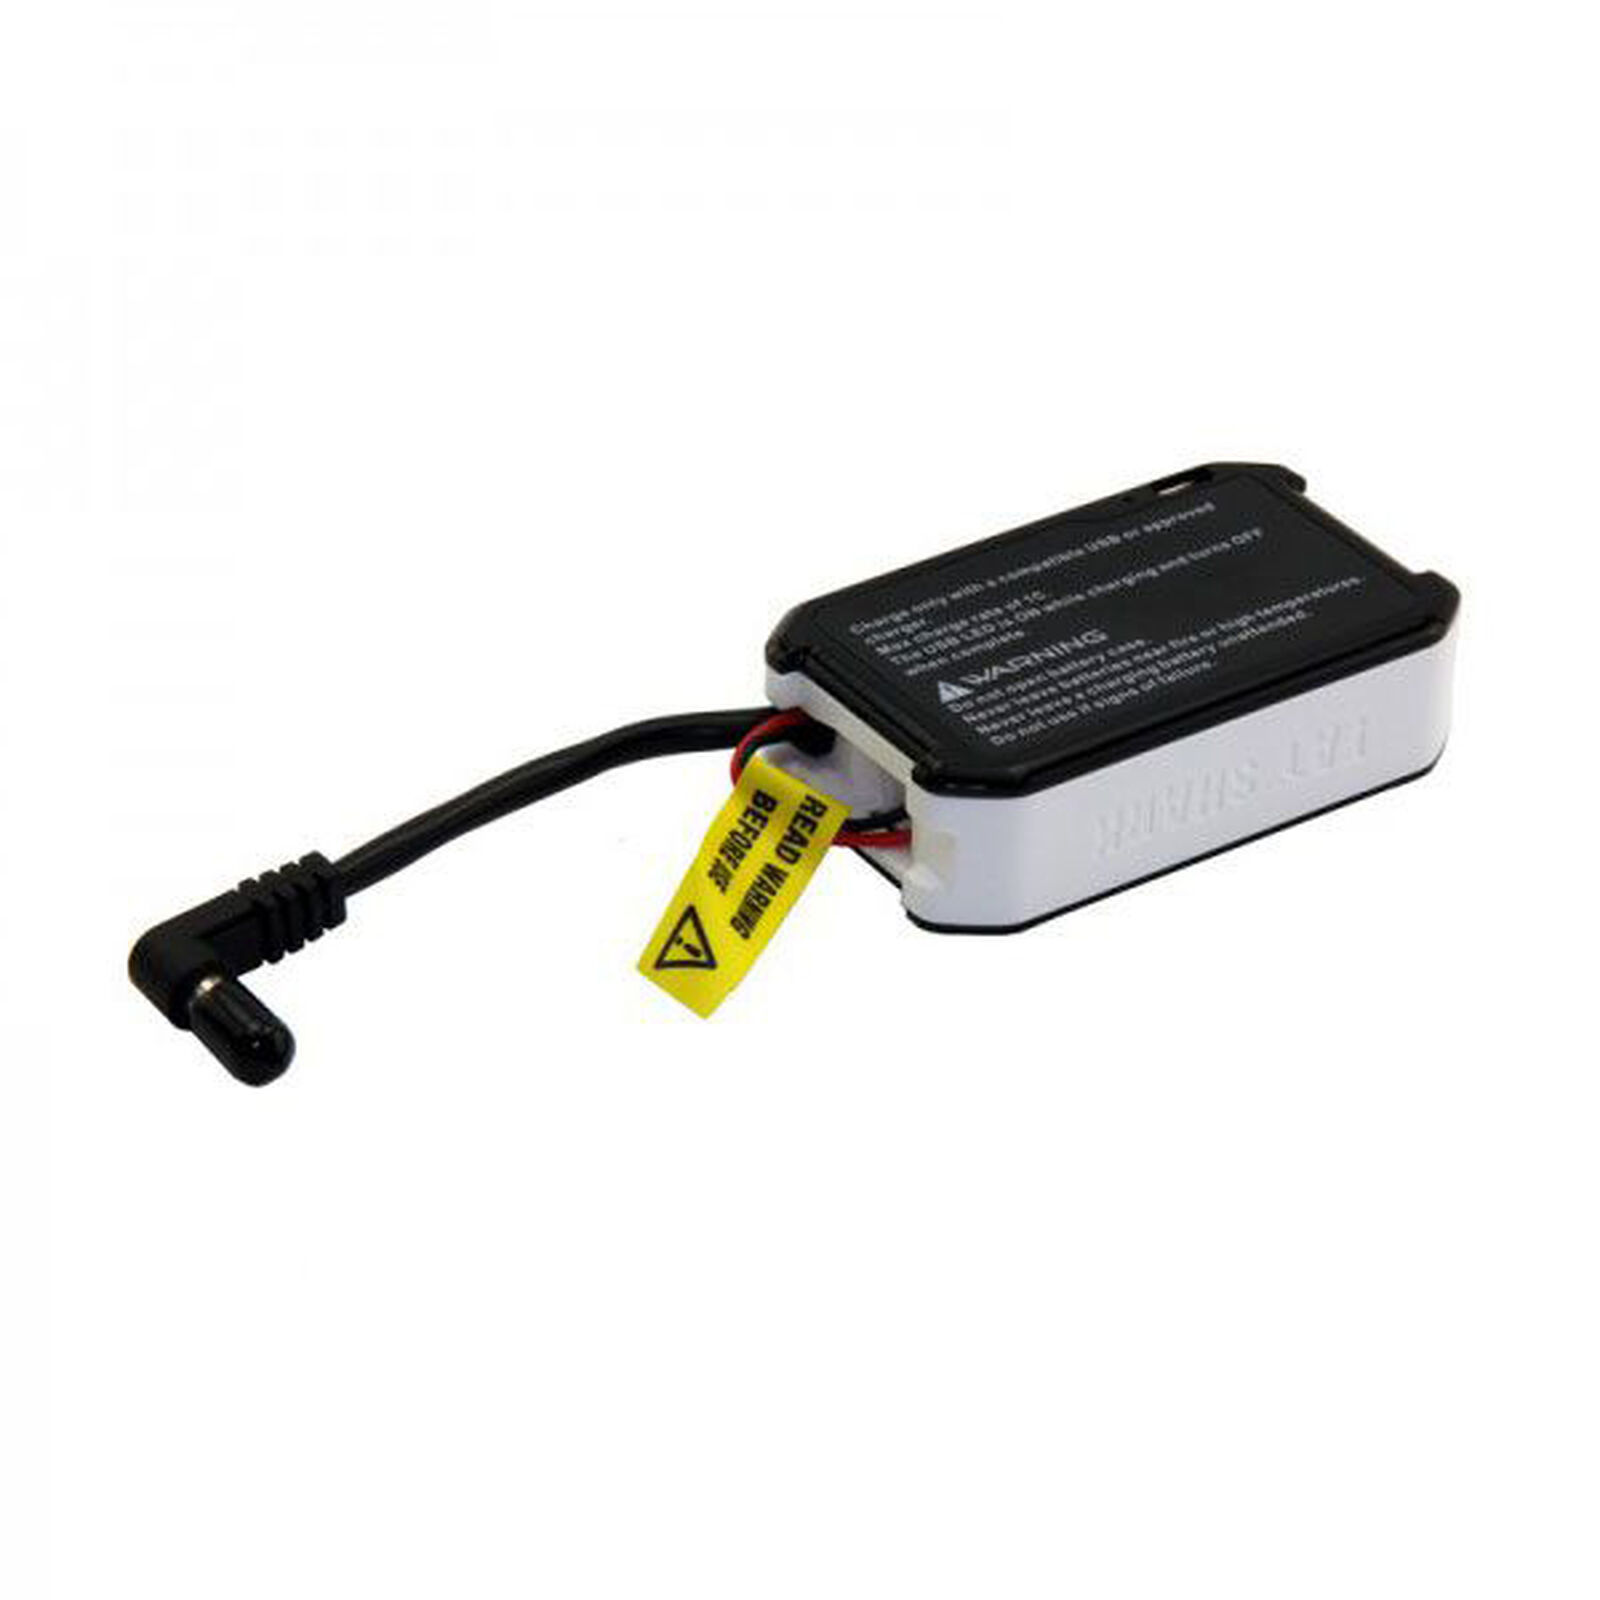 7.4V 1800mAh Li-Po USB Charging Battery Pack